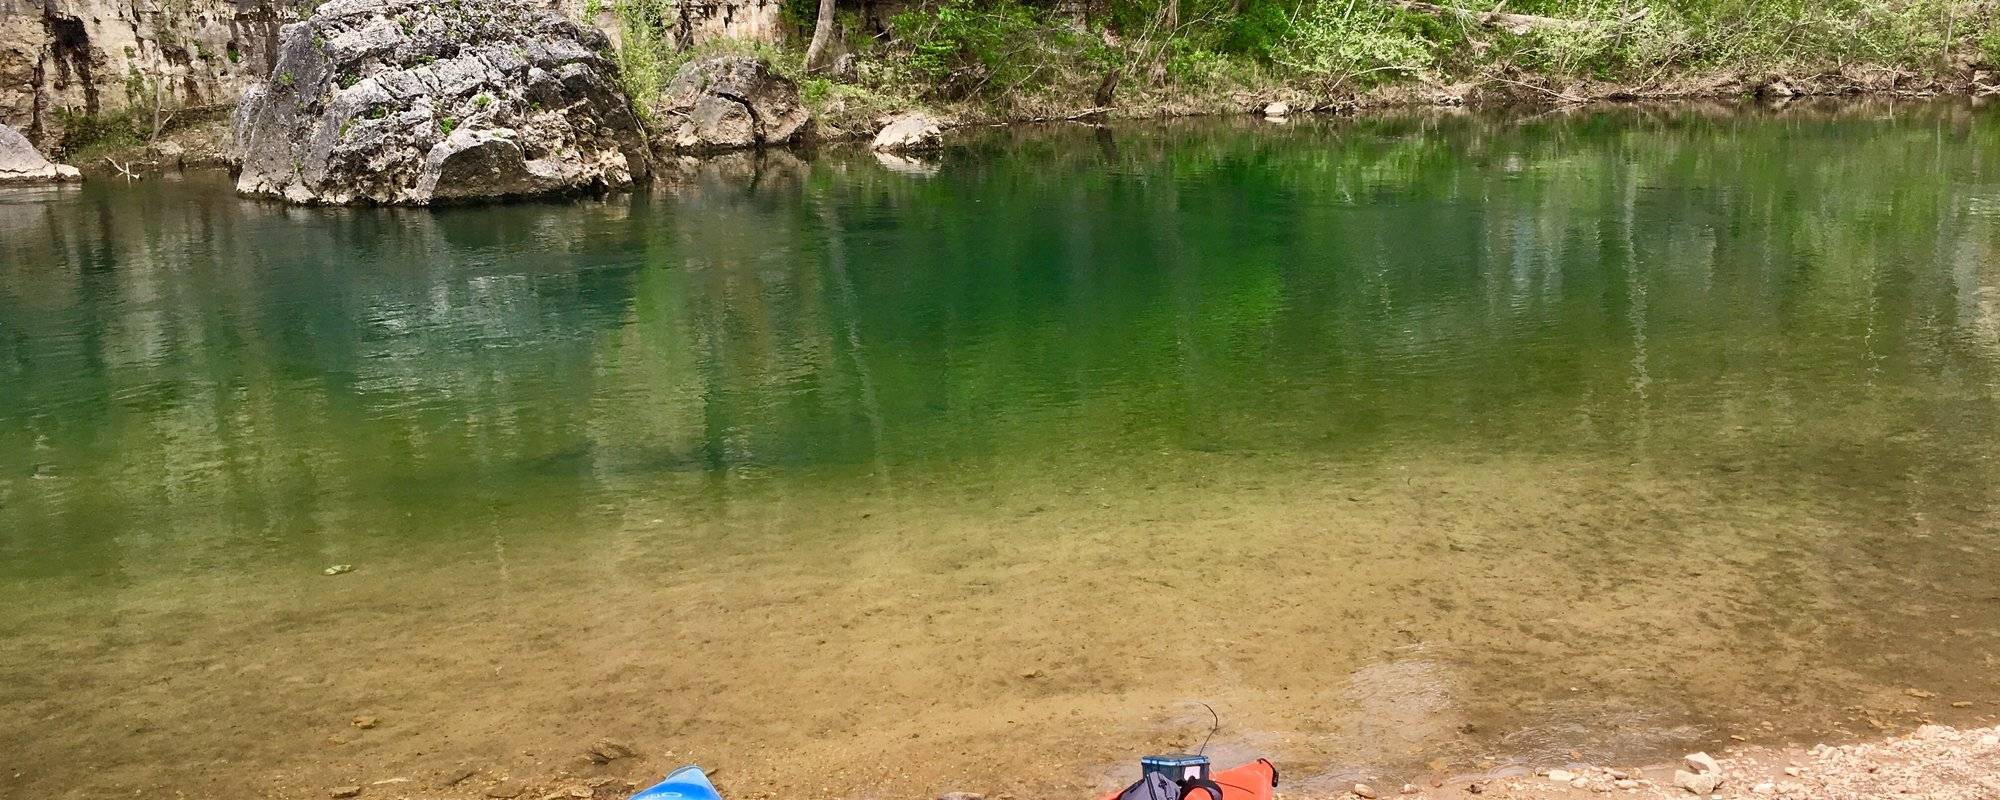 First kayak trip of 2019 on the Jacks Fork River!